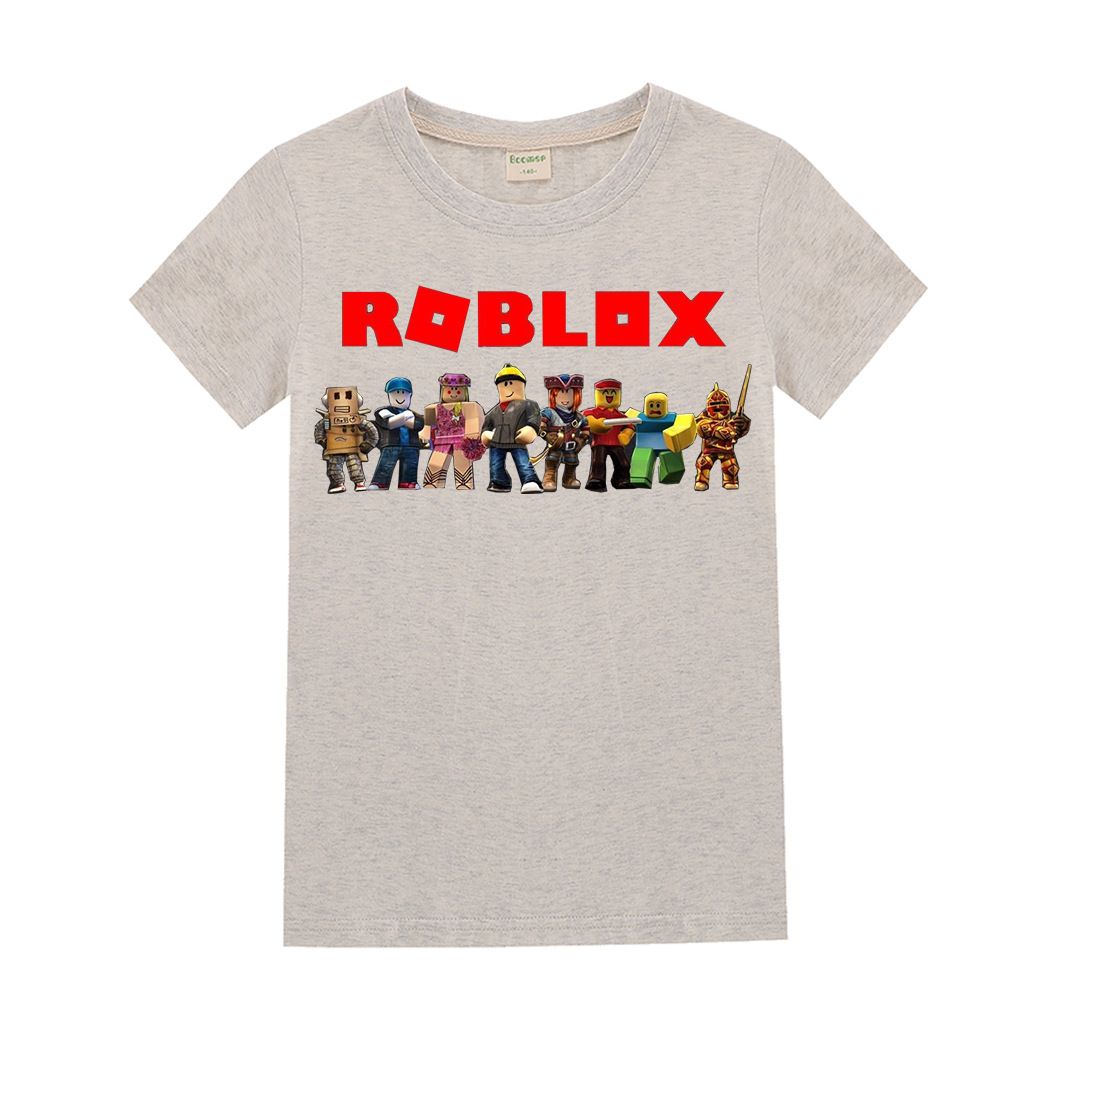 2020 Teen Kids Designer T Shirts Summer T Shirt Roblox Printing Cotton Tees Hip Hop Fashion Boy Girl Short Sleeve Tshirt Size 6 8 9 14 From Baby0512 13 77 Dhgate Com